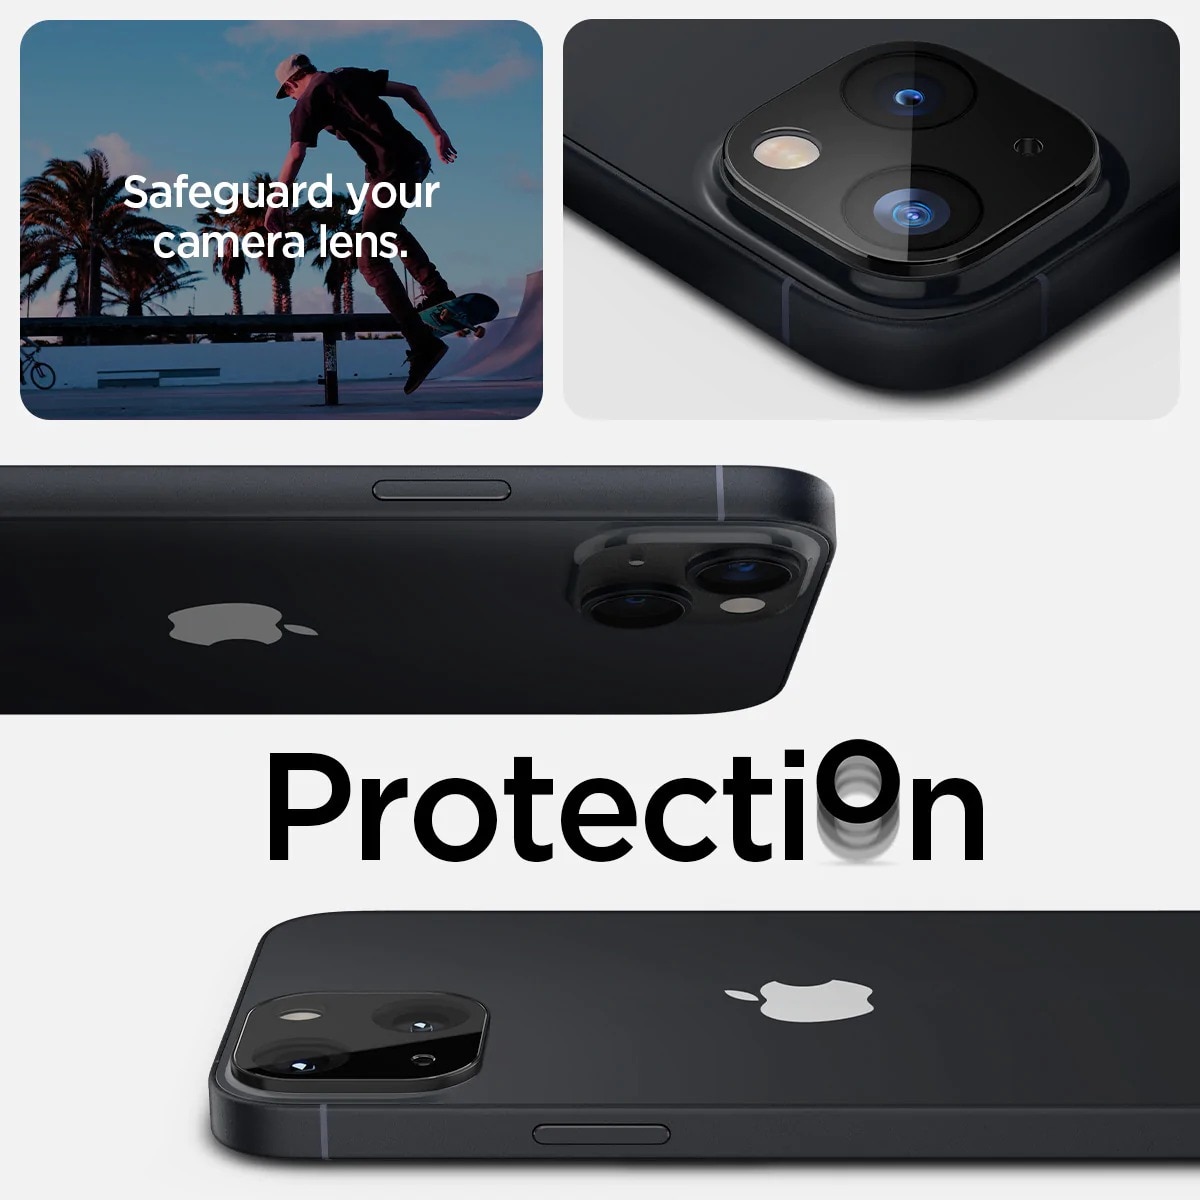 iPhone 14 Plus Optik Lens Protector Black (2-pack)